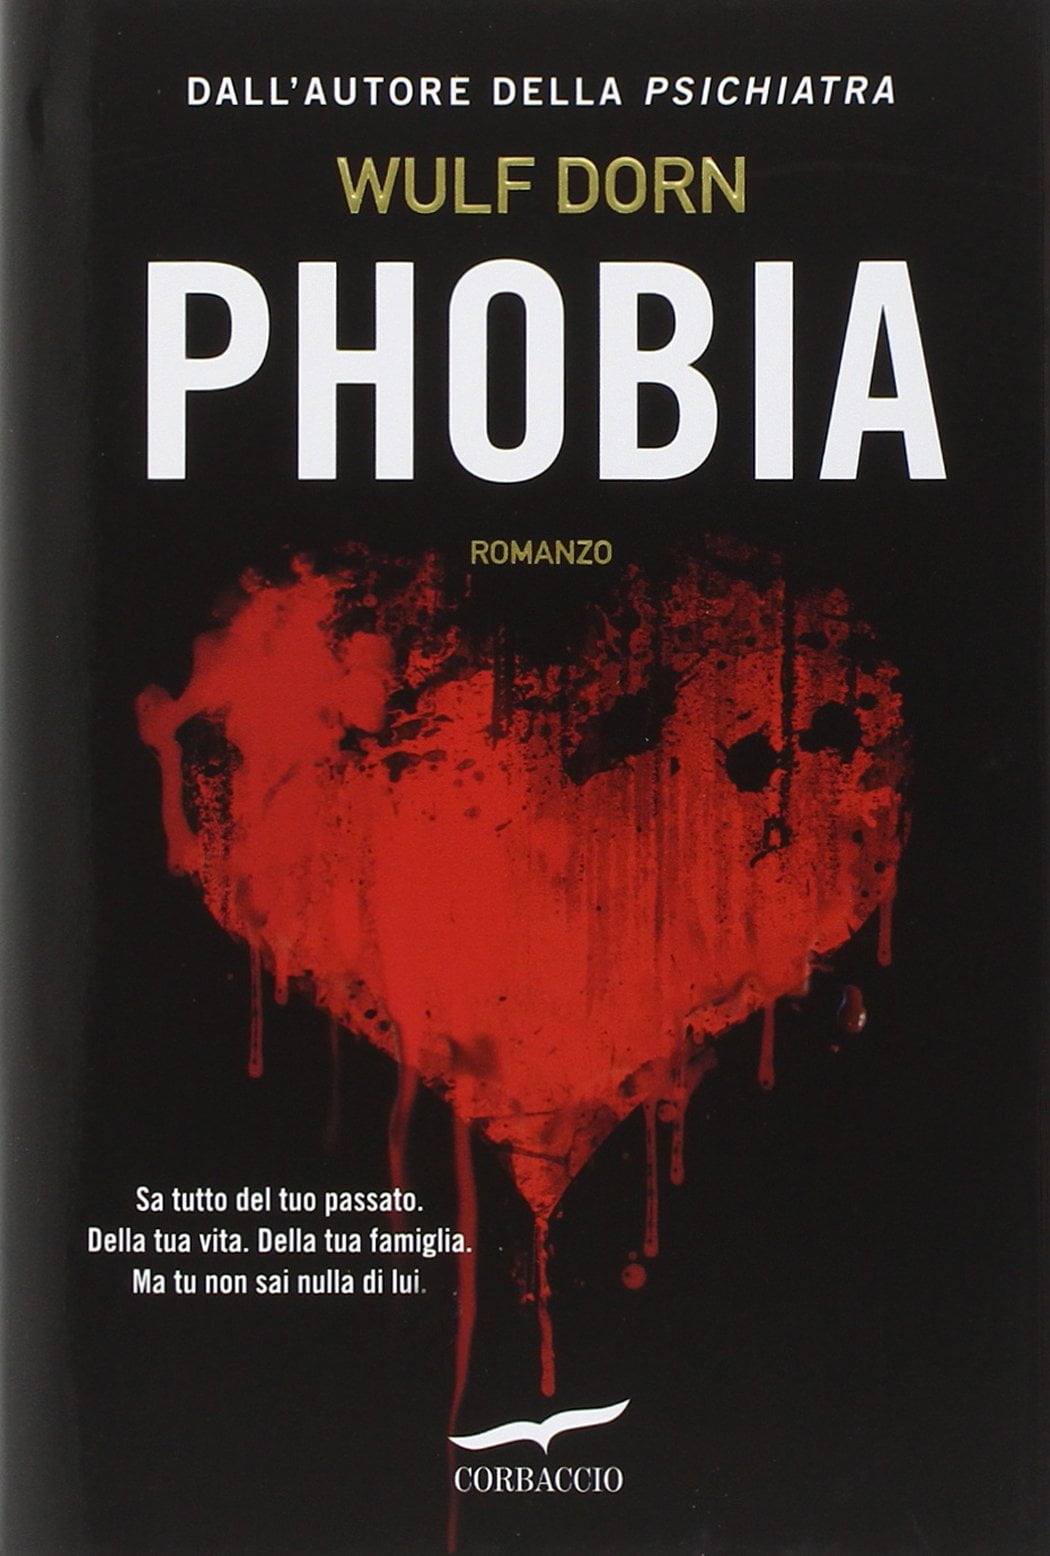 “Phobia” – Wulf Dorn